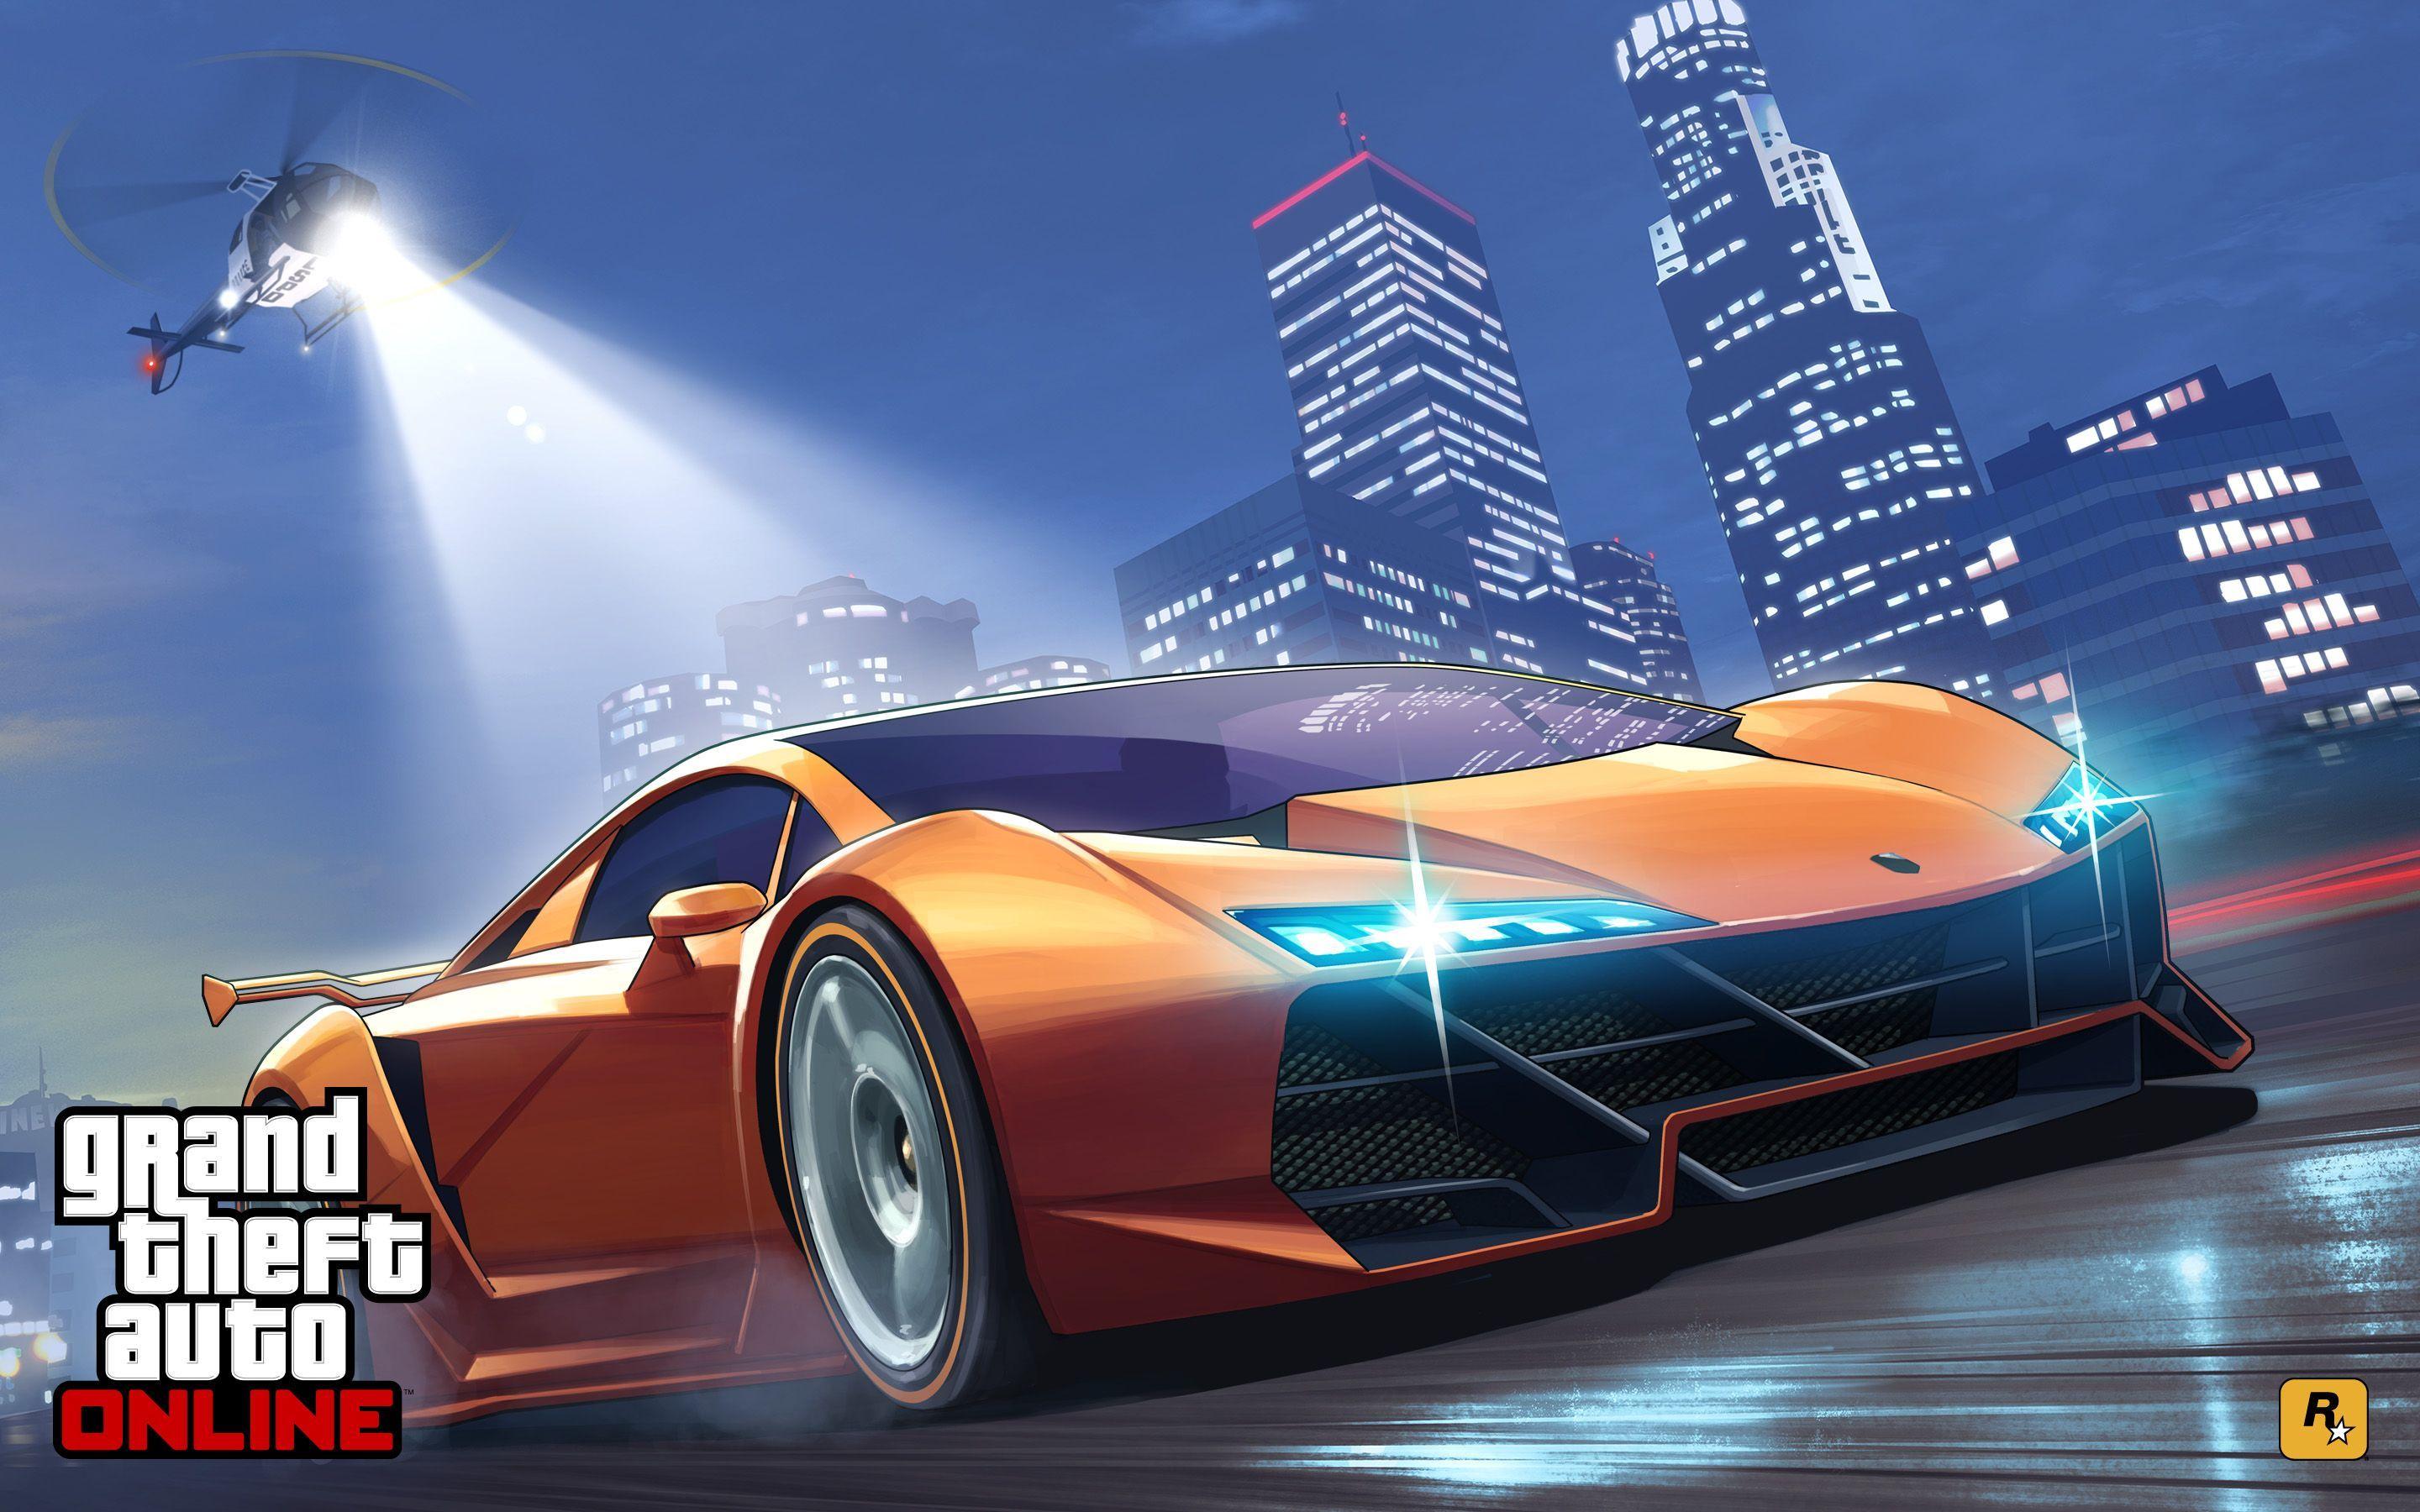 Grand Theft Auto Online Wallpaper Image. Grand theft auto